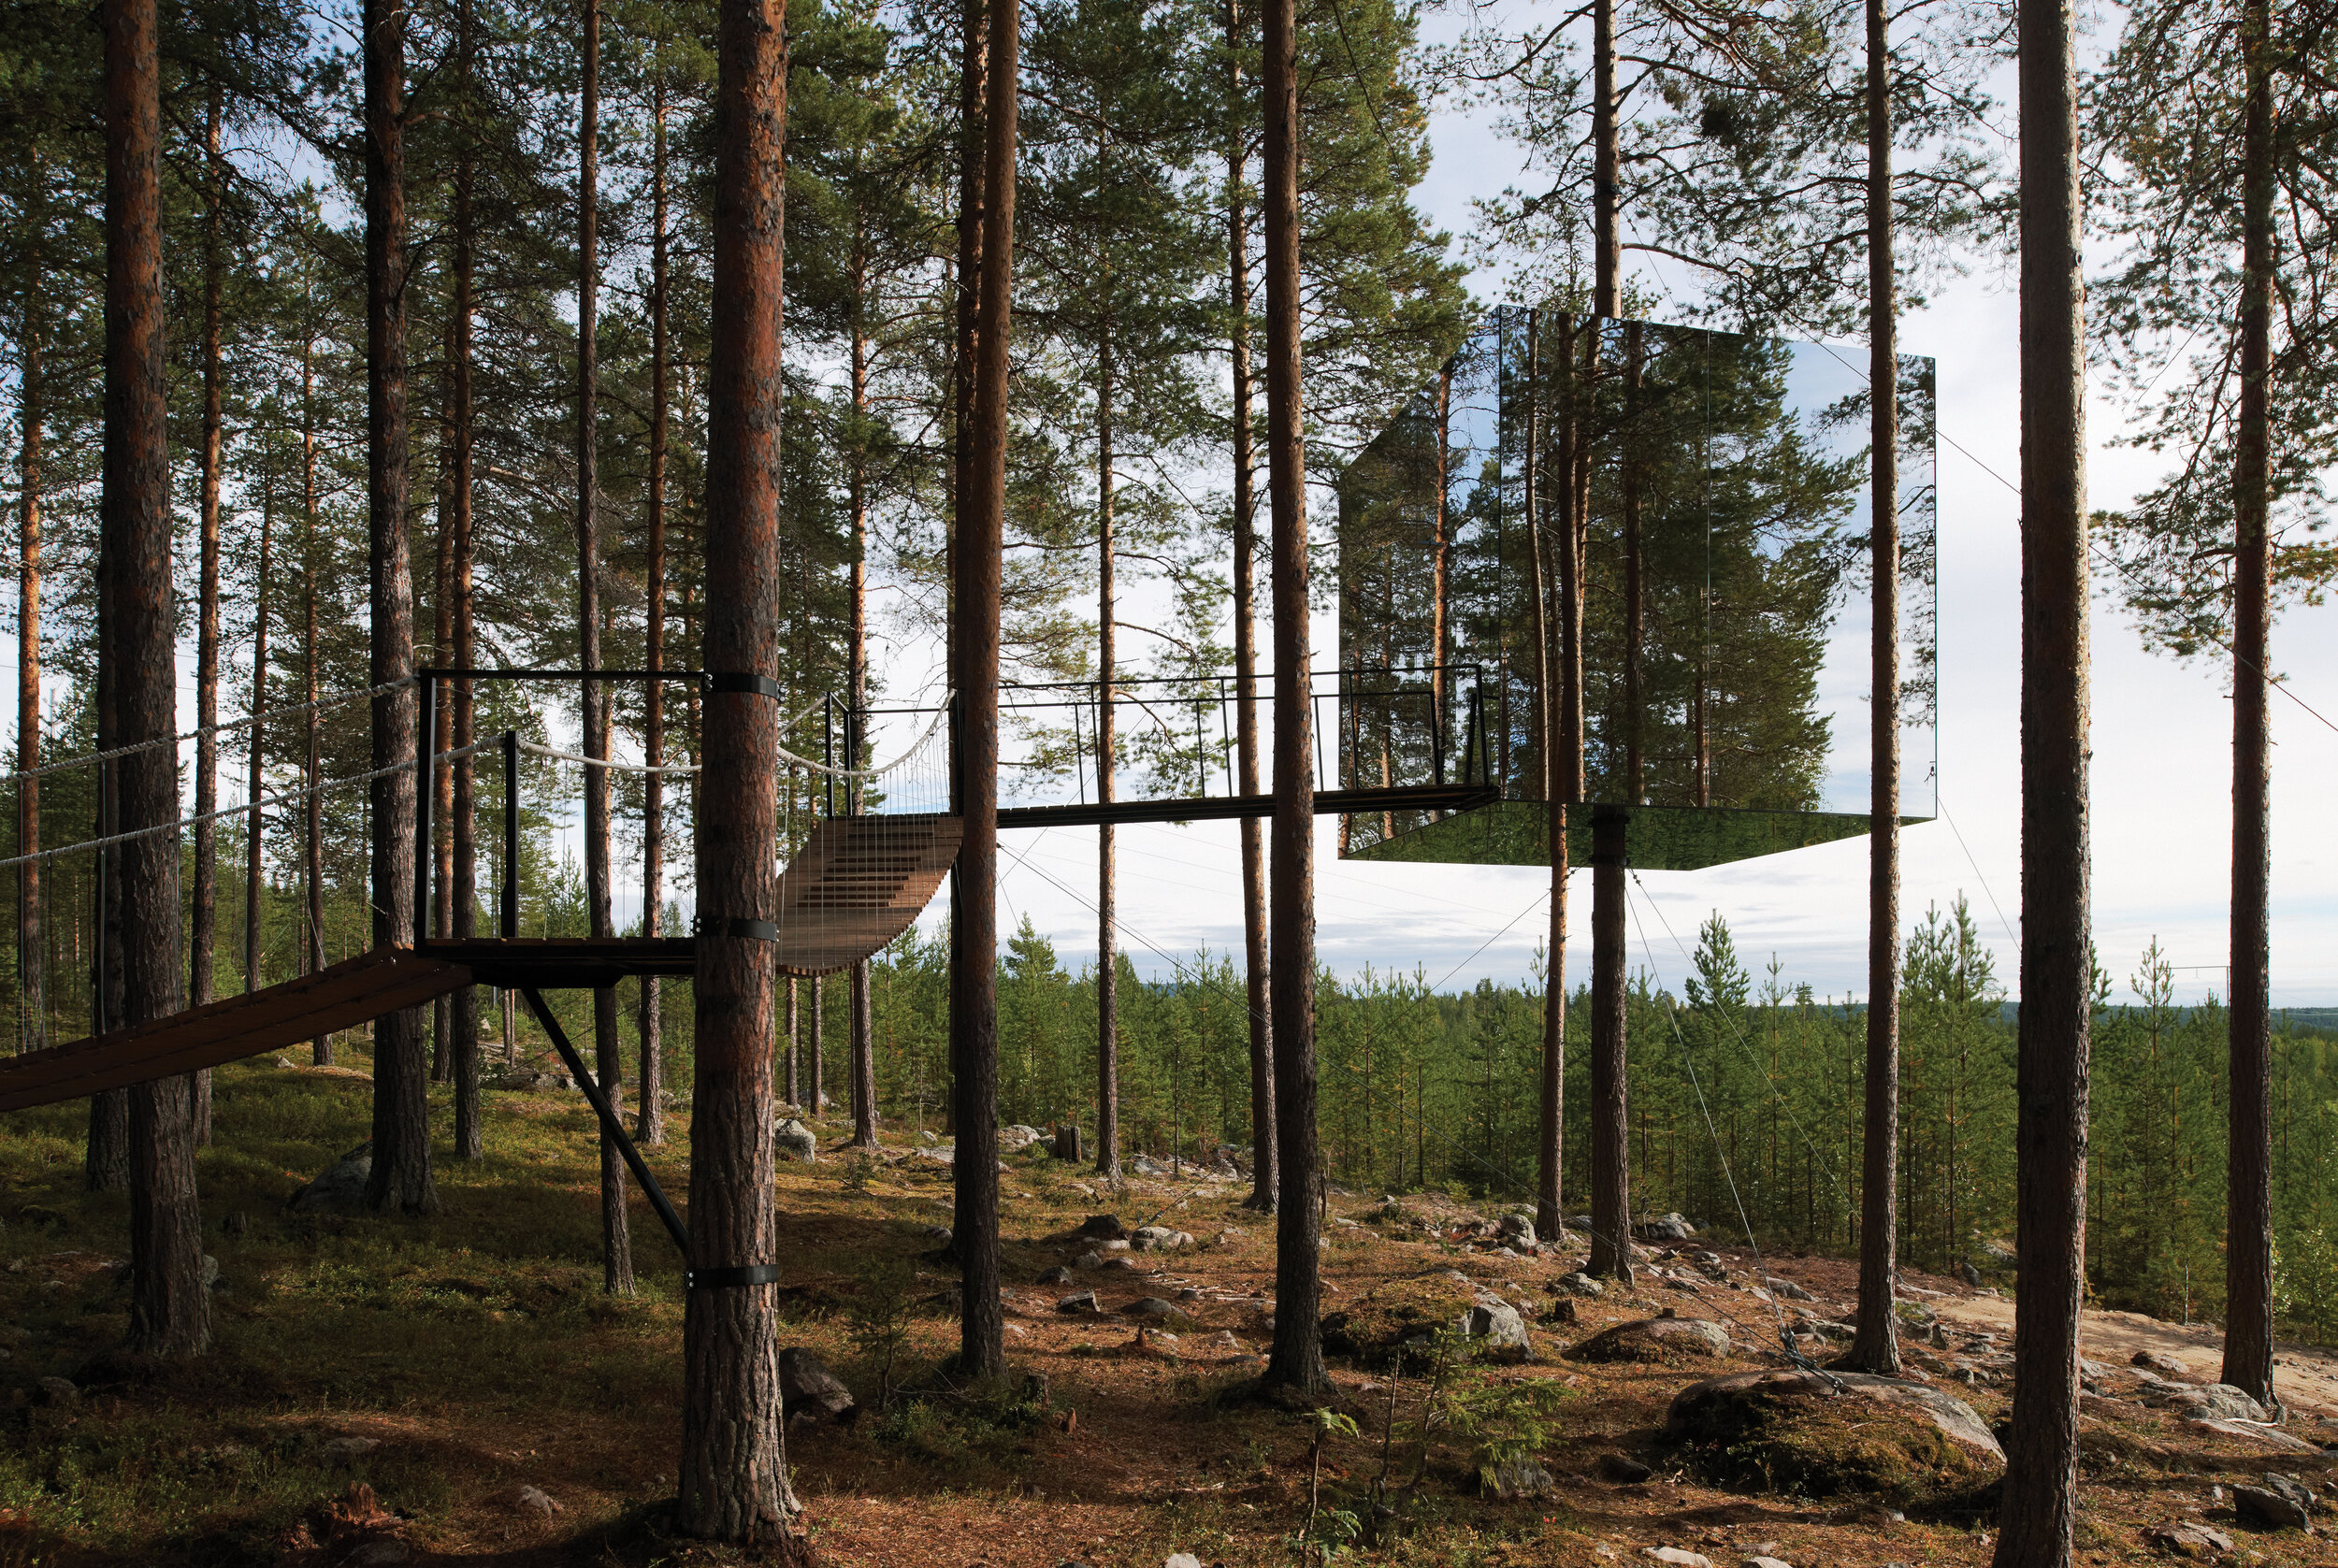 Tham &amp; Videgård. “Mirrorcube, Treehotel in Harads” (2008-2010). Photographed by Åke E:son Lindman, Lindman Photography. Courtesy of Tham &amp; Videgård.